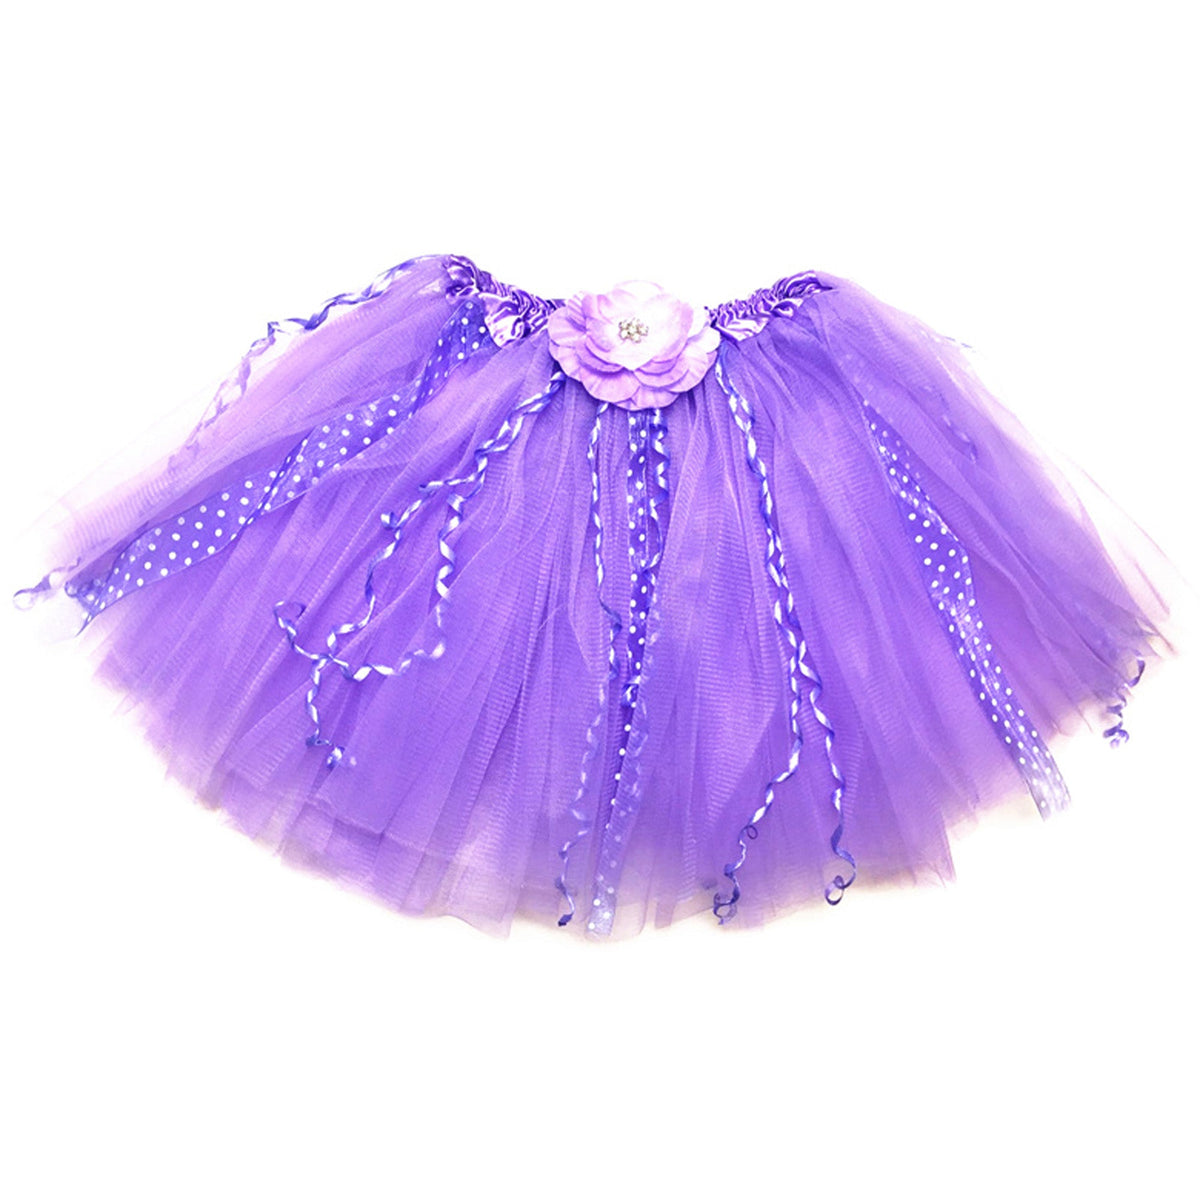 IVY TRADING INC. Costume Accessories Purple Tutu for Kids 9780000001177